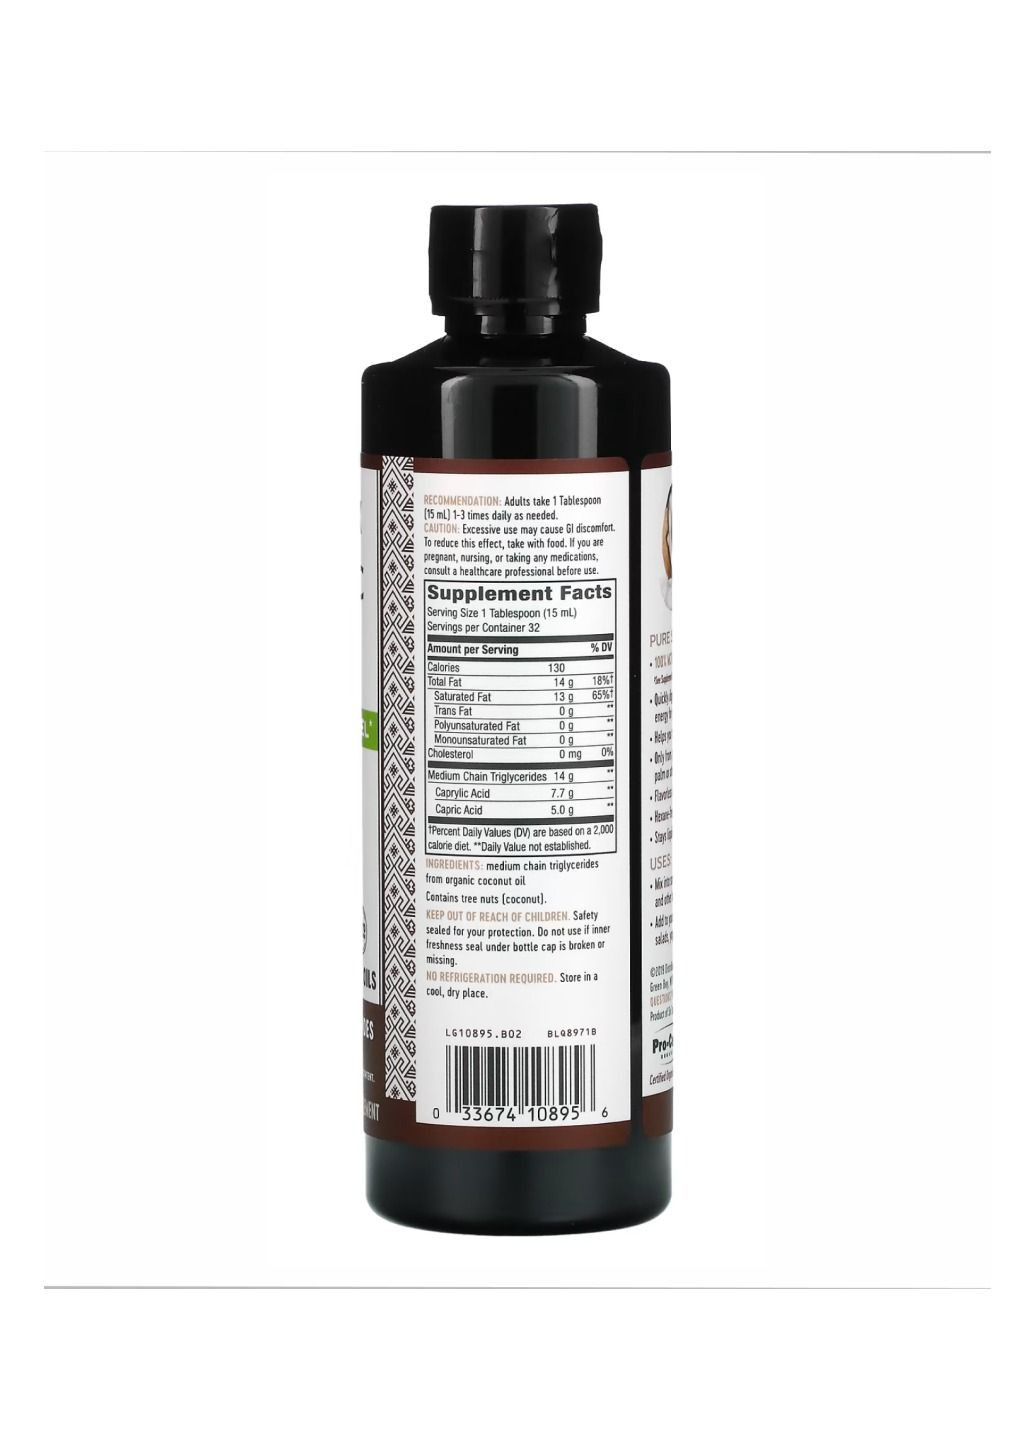 Комплекс жирних кислот 100% Organic MCT Oil - 16 oz Nature's Way (288677391)